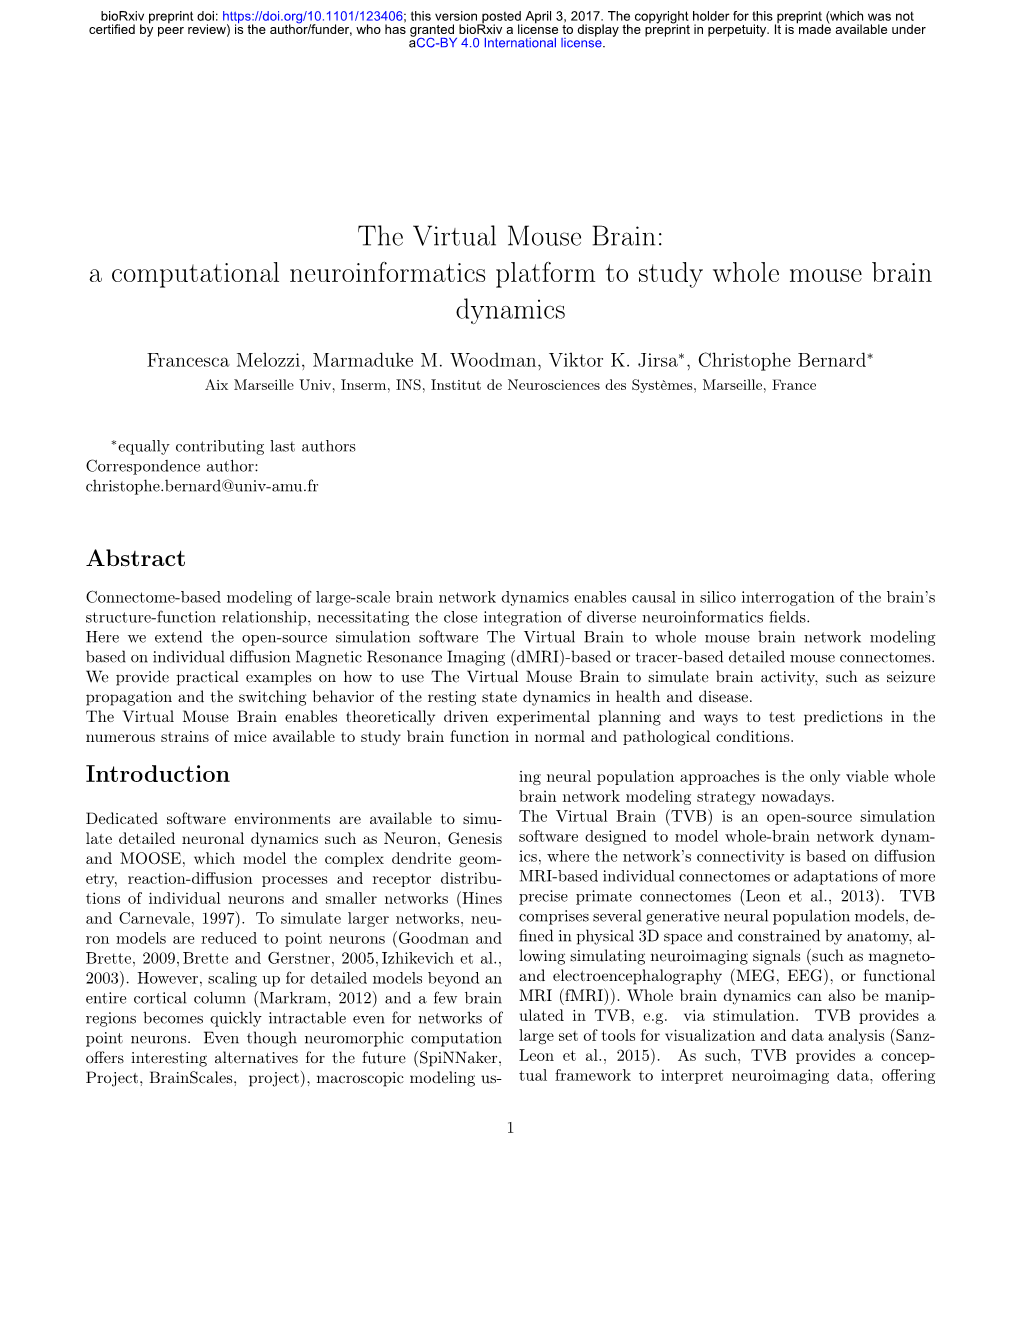 The Virtual Mouse Brain: a Computational Neuroinformatics Platform to Study Whole Mouse Brain Dynamics